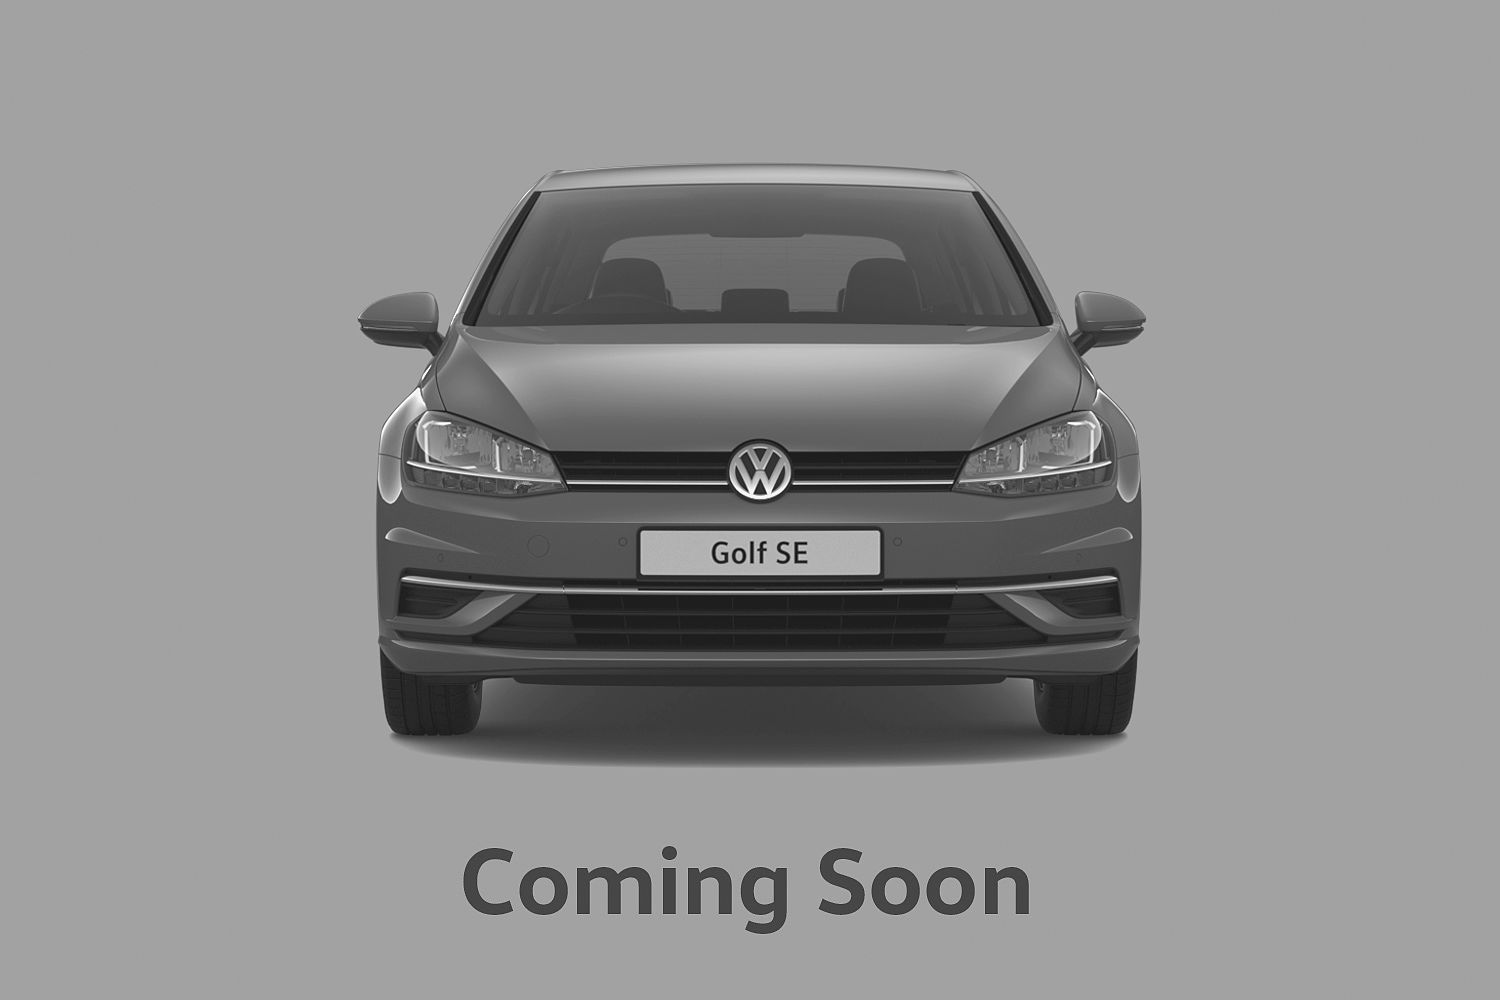 Volkswagen Golf SE Nav 1.4 TSI 125PS DSG *Metallic Paint*